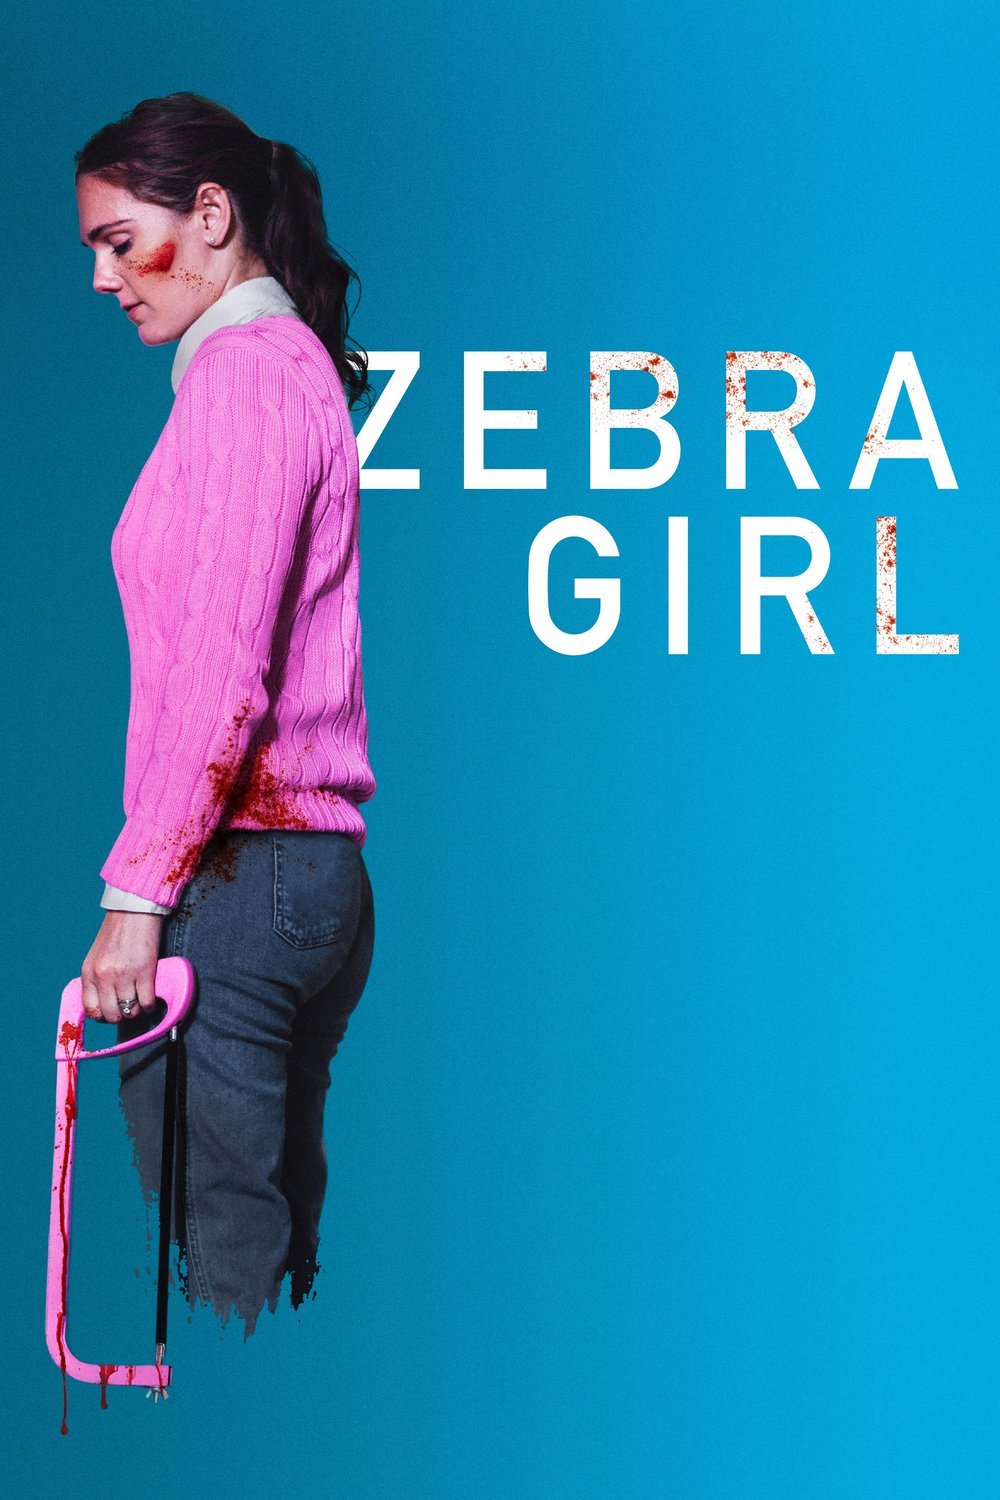 L'affiche du film Zebra Girl